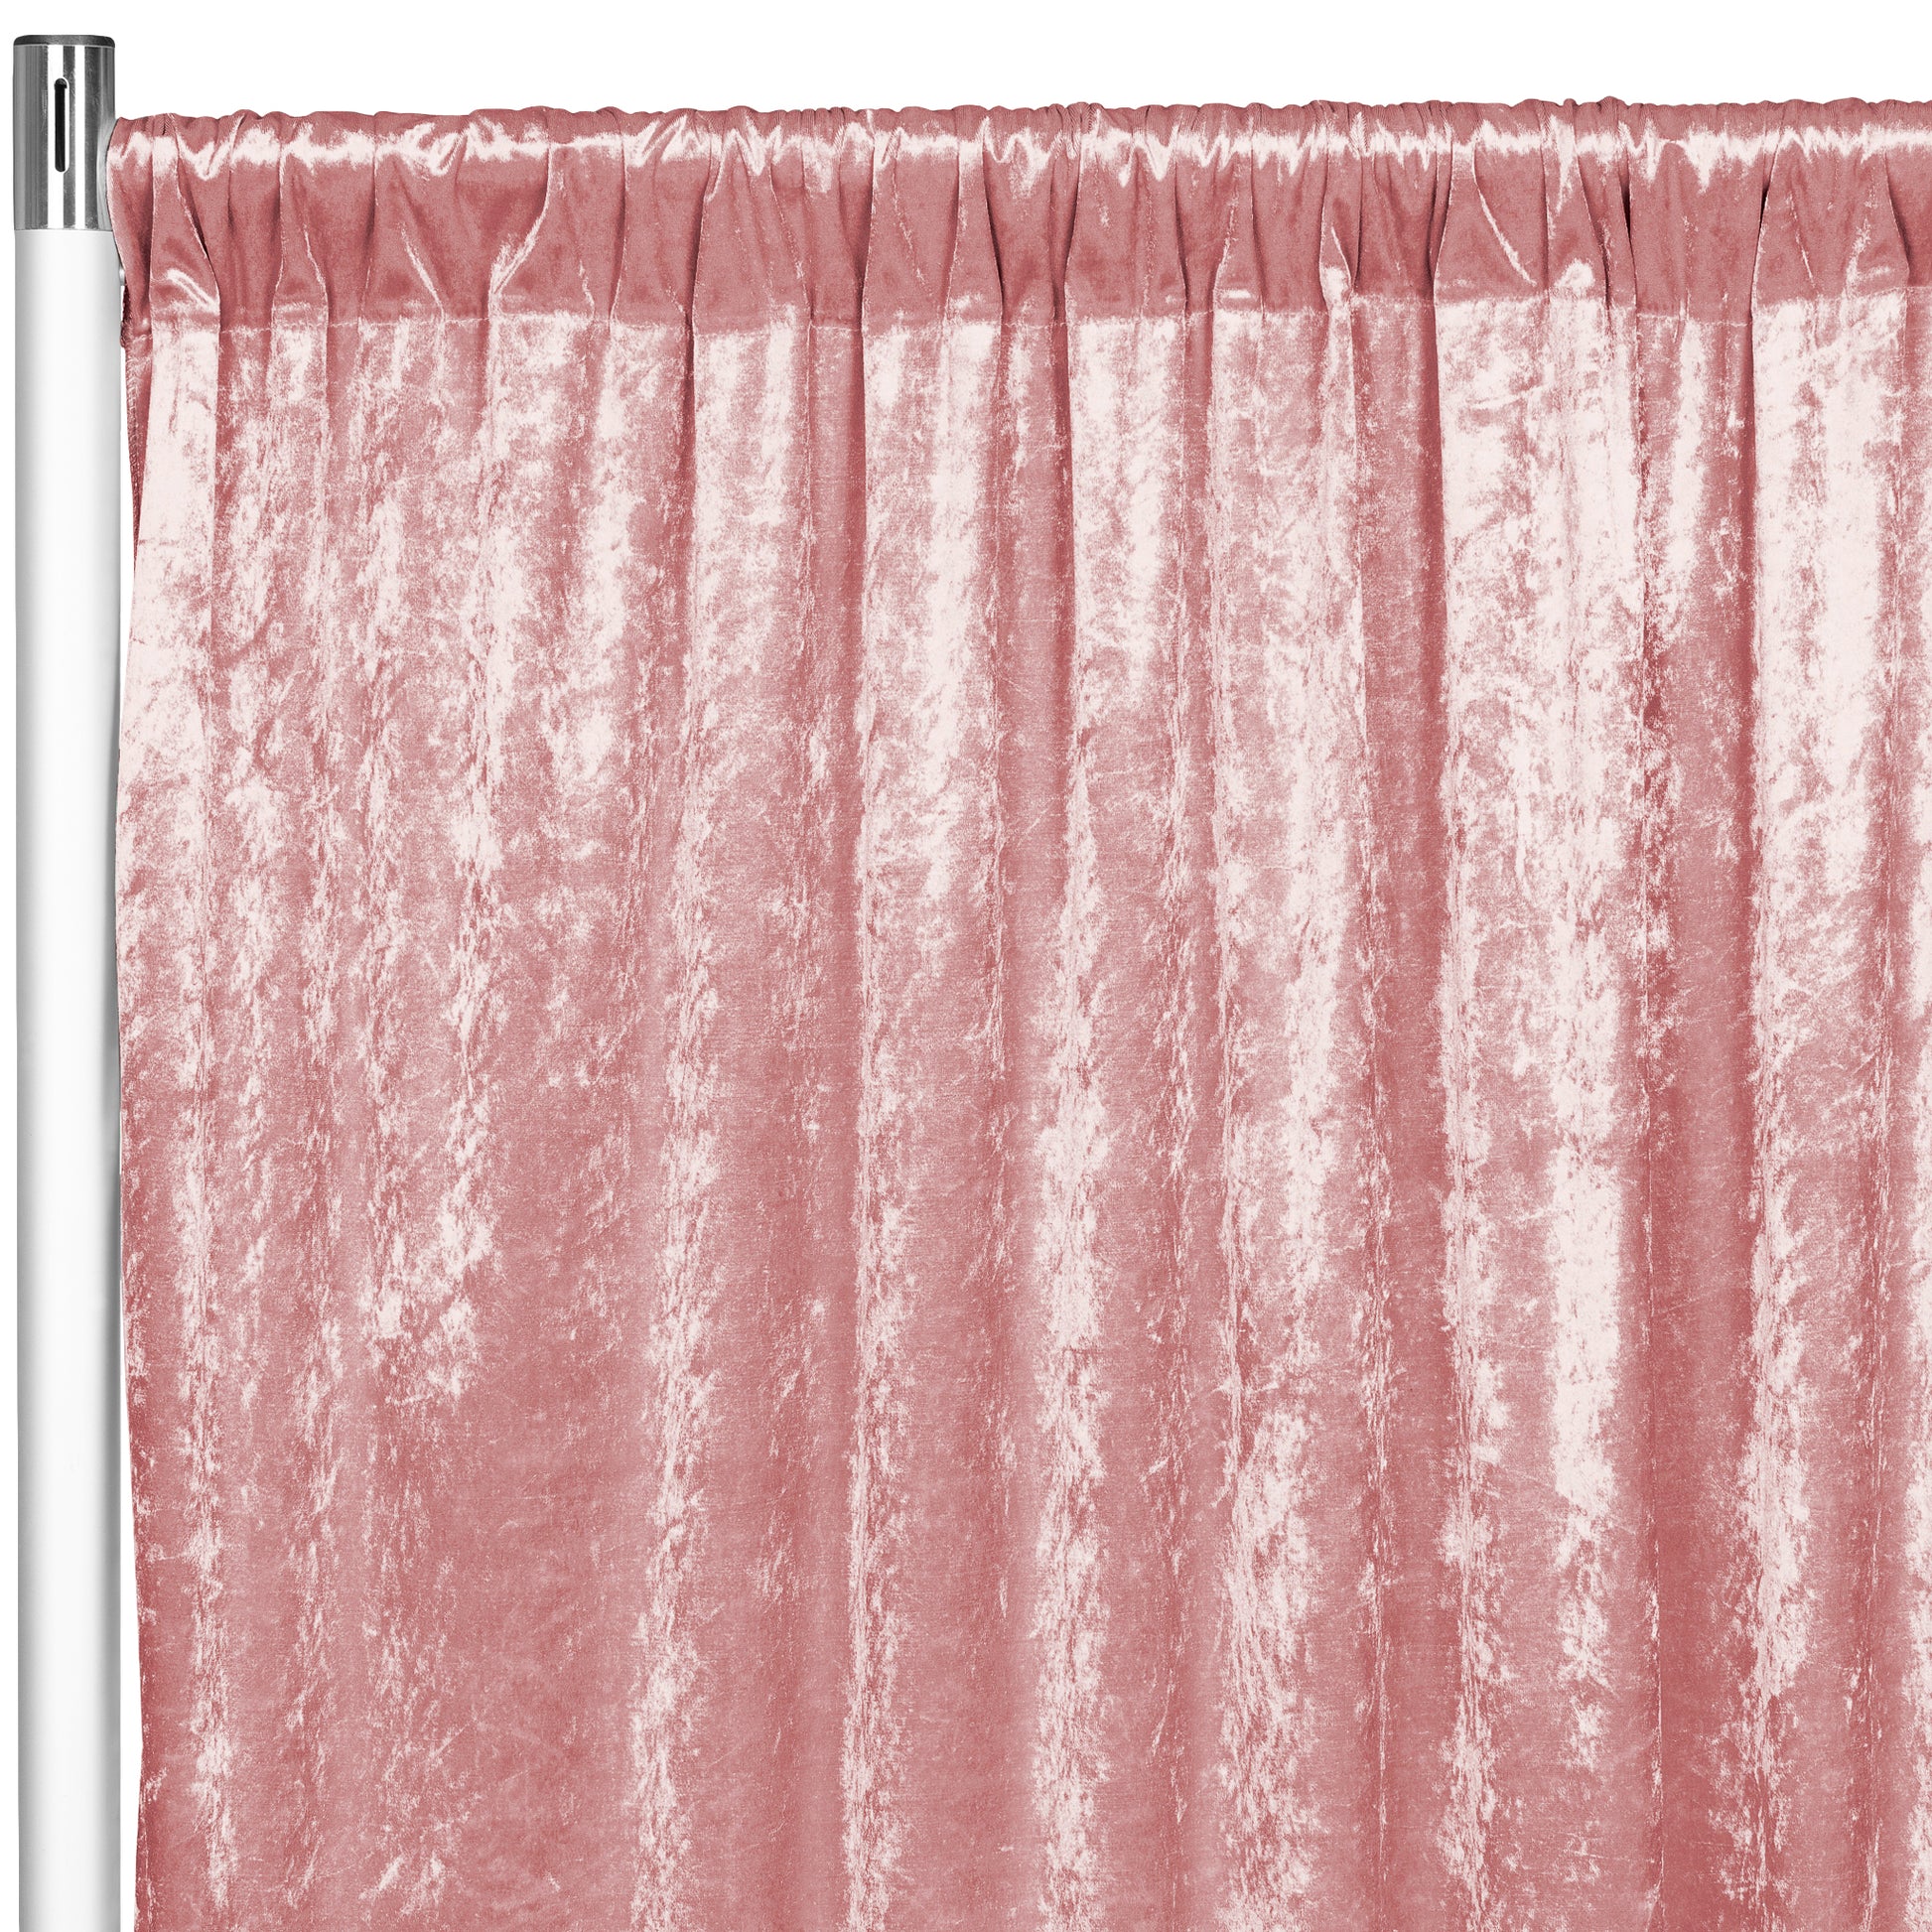 Velvet 16ft H x 52" W Drape/Backdrop Curtain Panel - Dusty Rose/Mauve